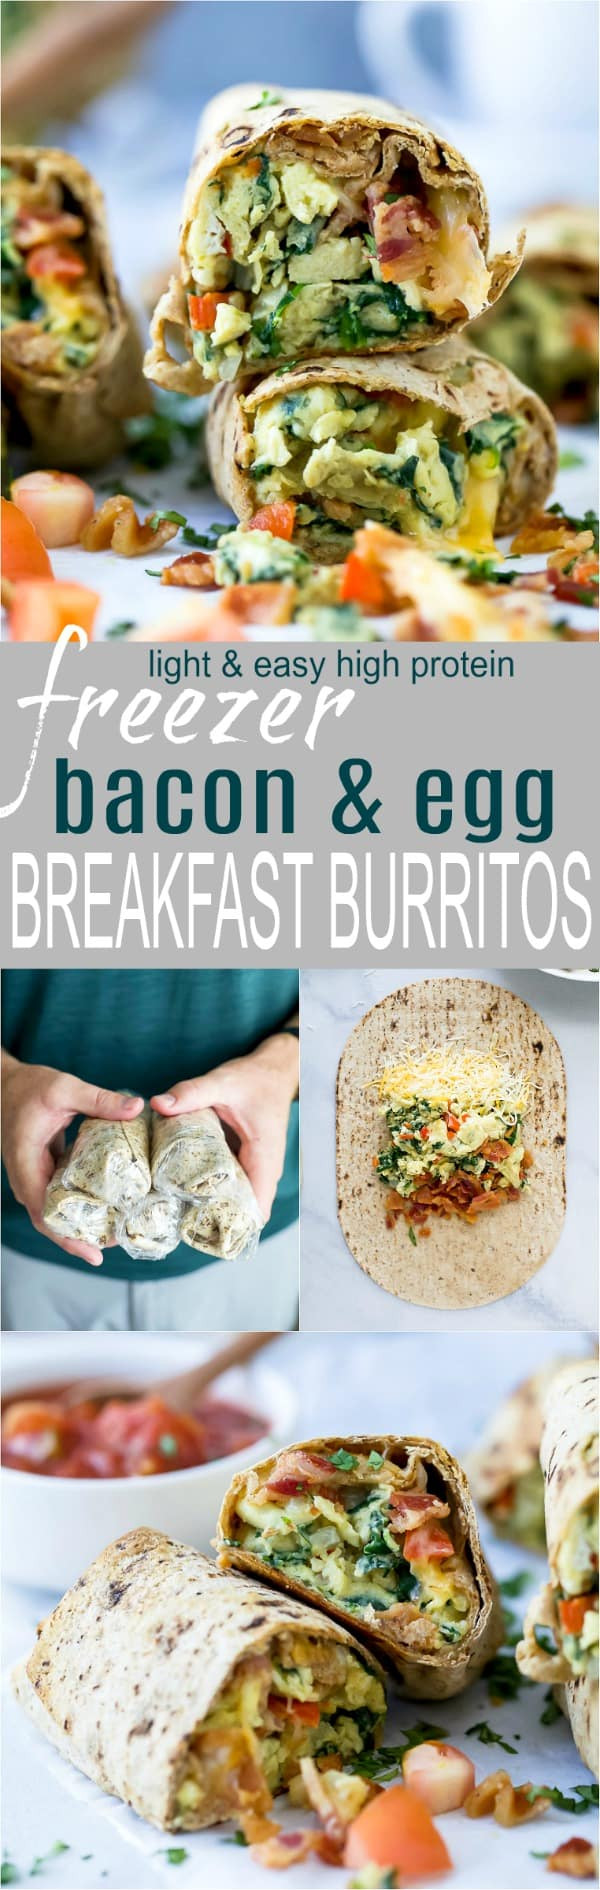 Freezer Egg Burritos
 Freezer Bacon & Egg Breakfast Burritos